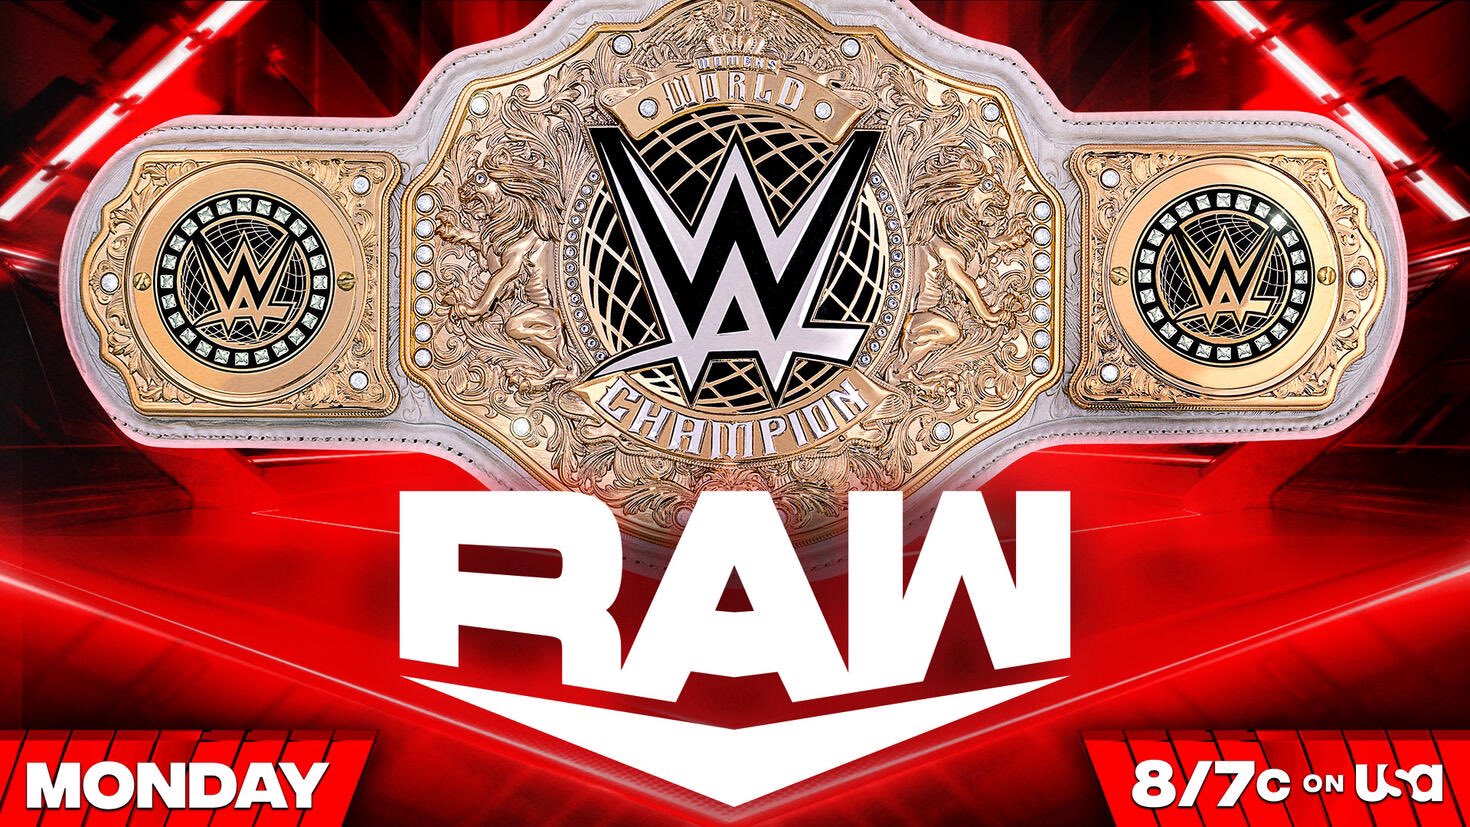 Battle Royal Set To Determine New Women’s World Champion On April 22 Raw